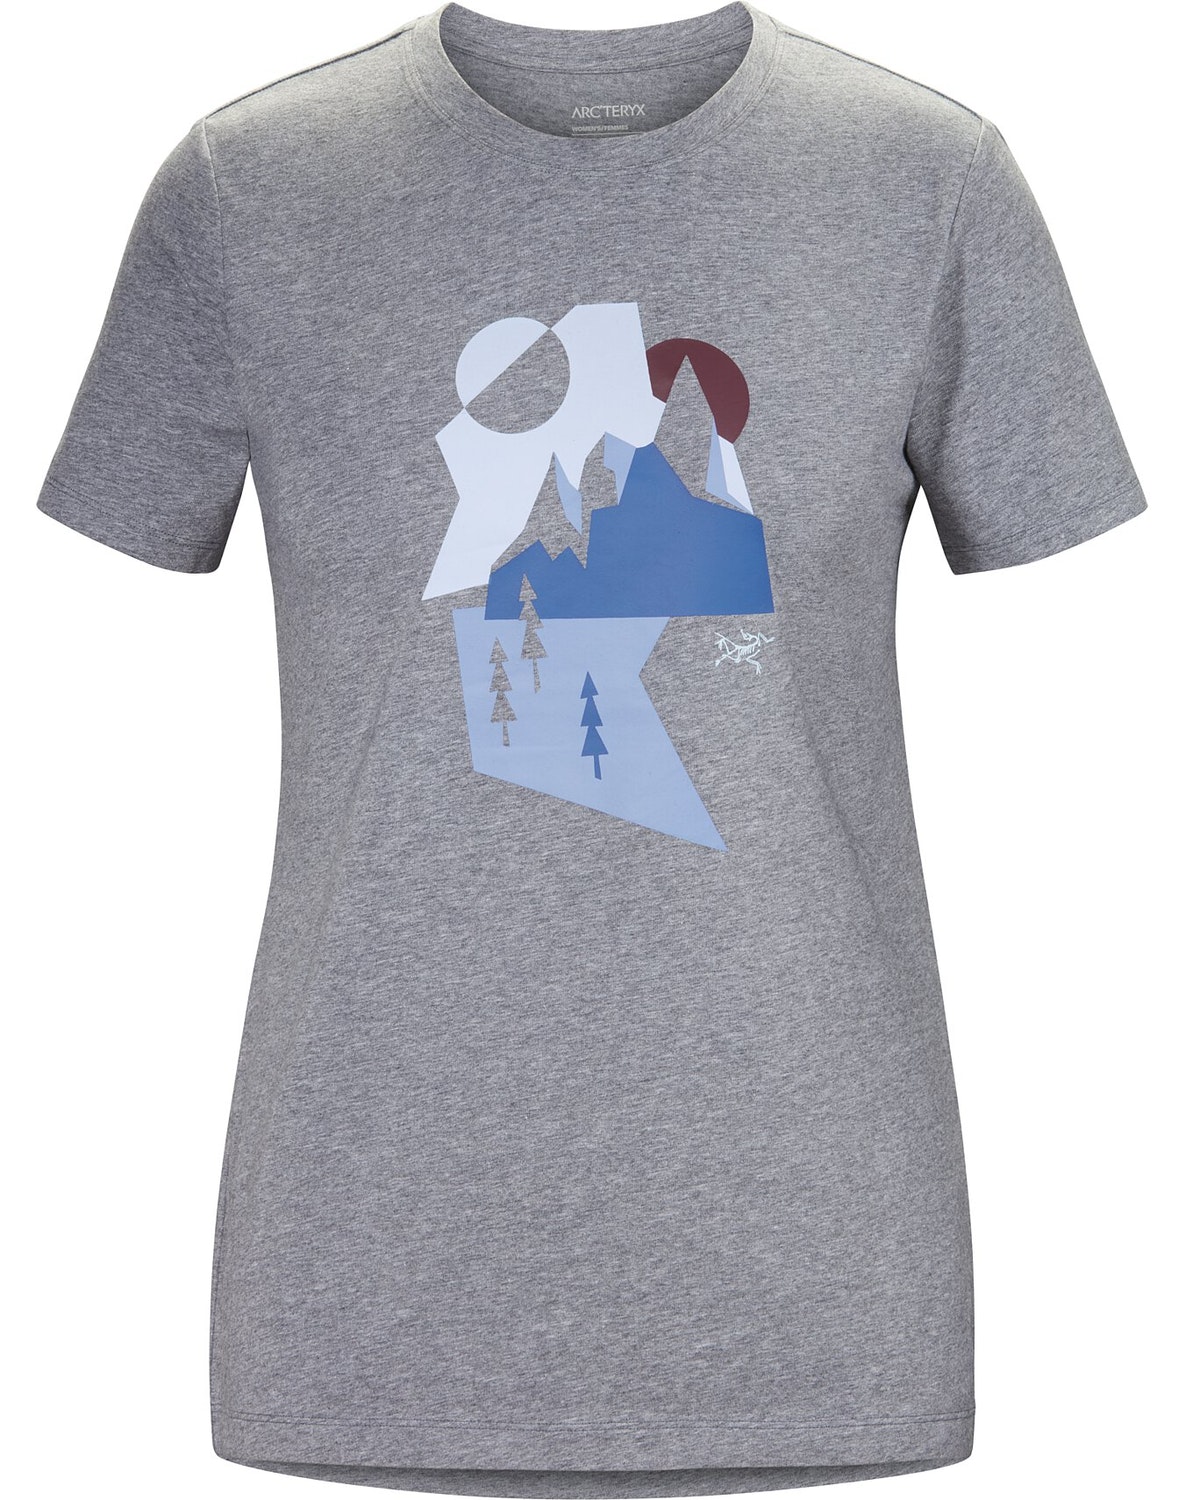 T-shirt Arc'teryx Paper Peaks Donna Grigie - IT-3357635